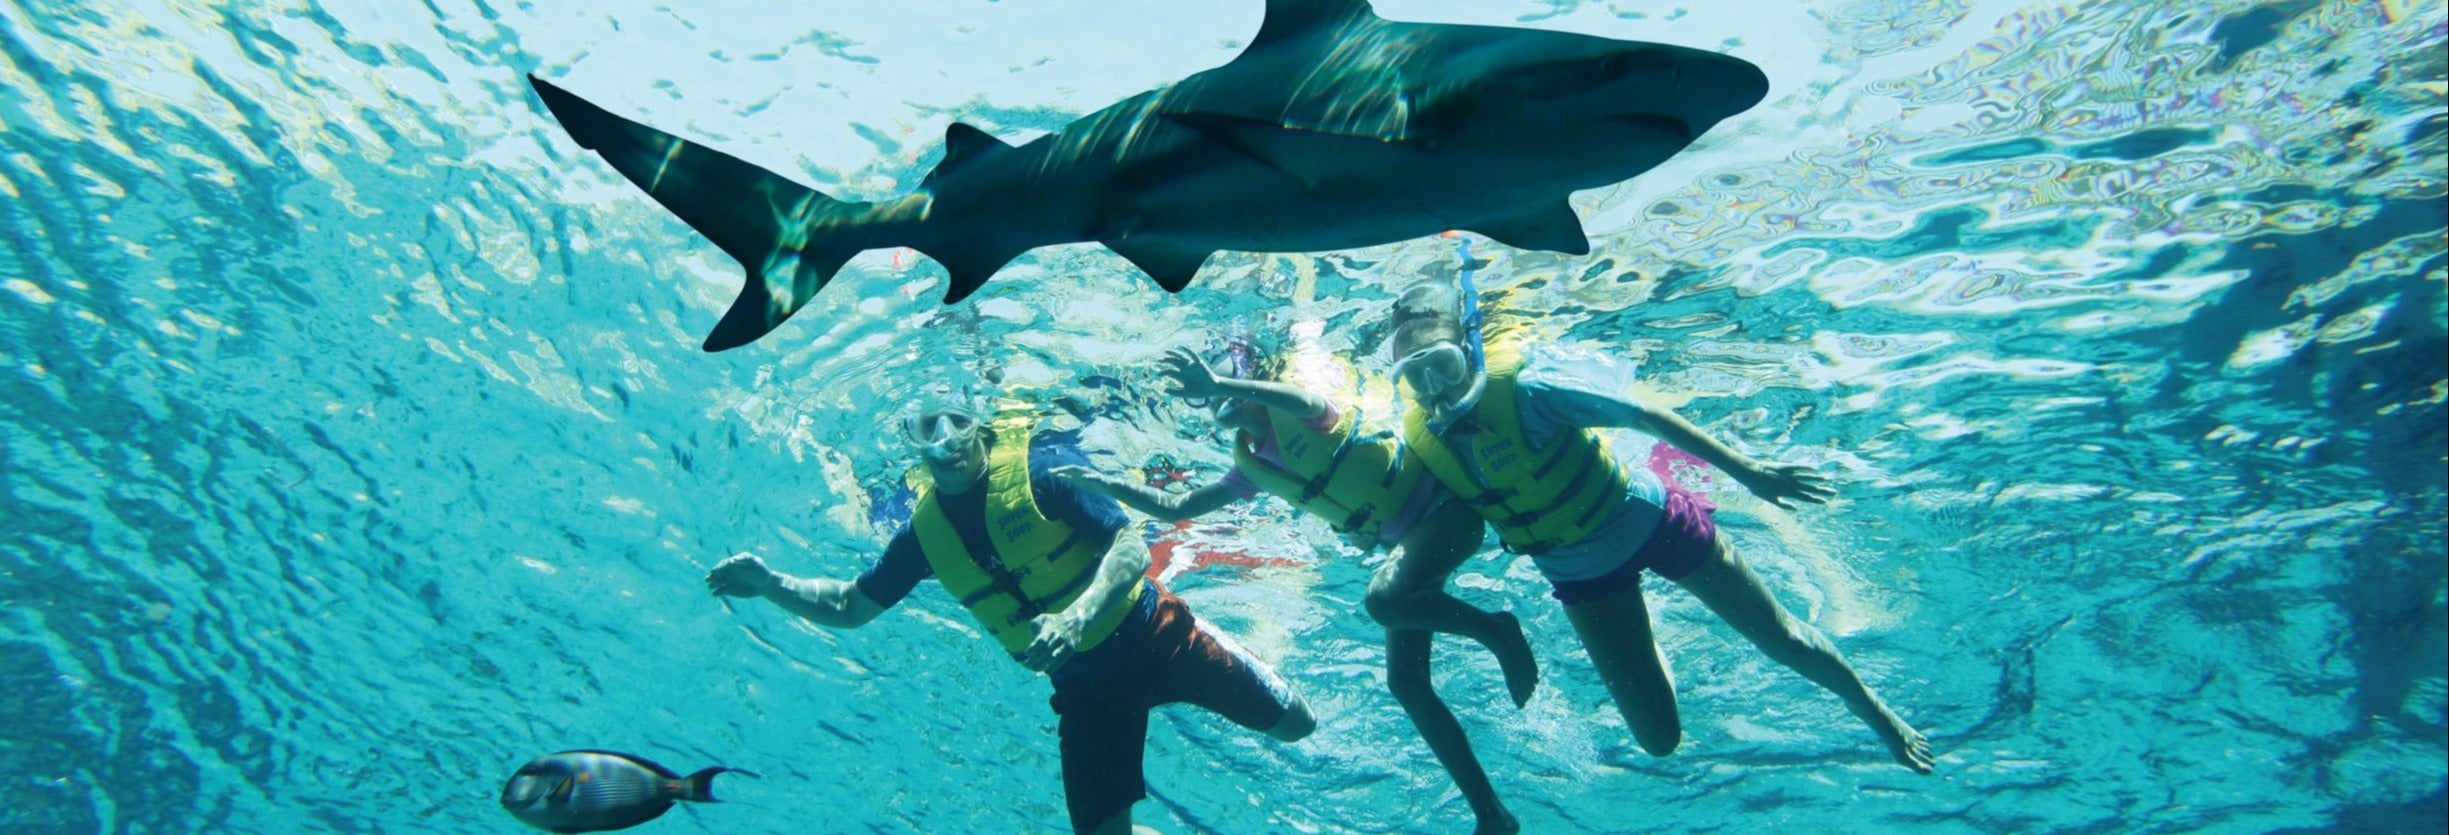 Aquaventure Waterpark Ticket + Snorkeling with Sharks